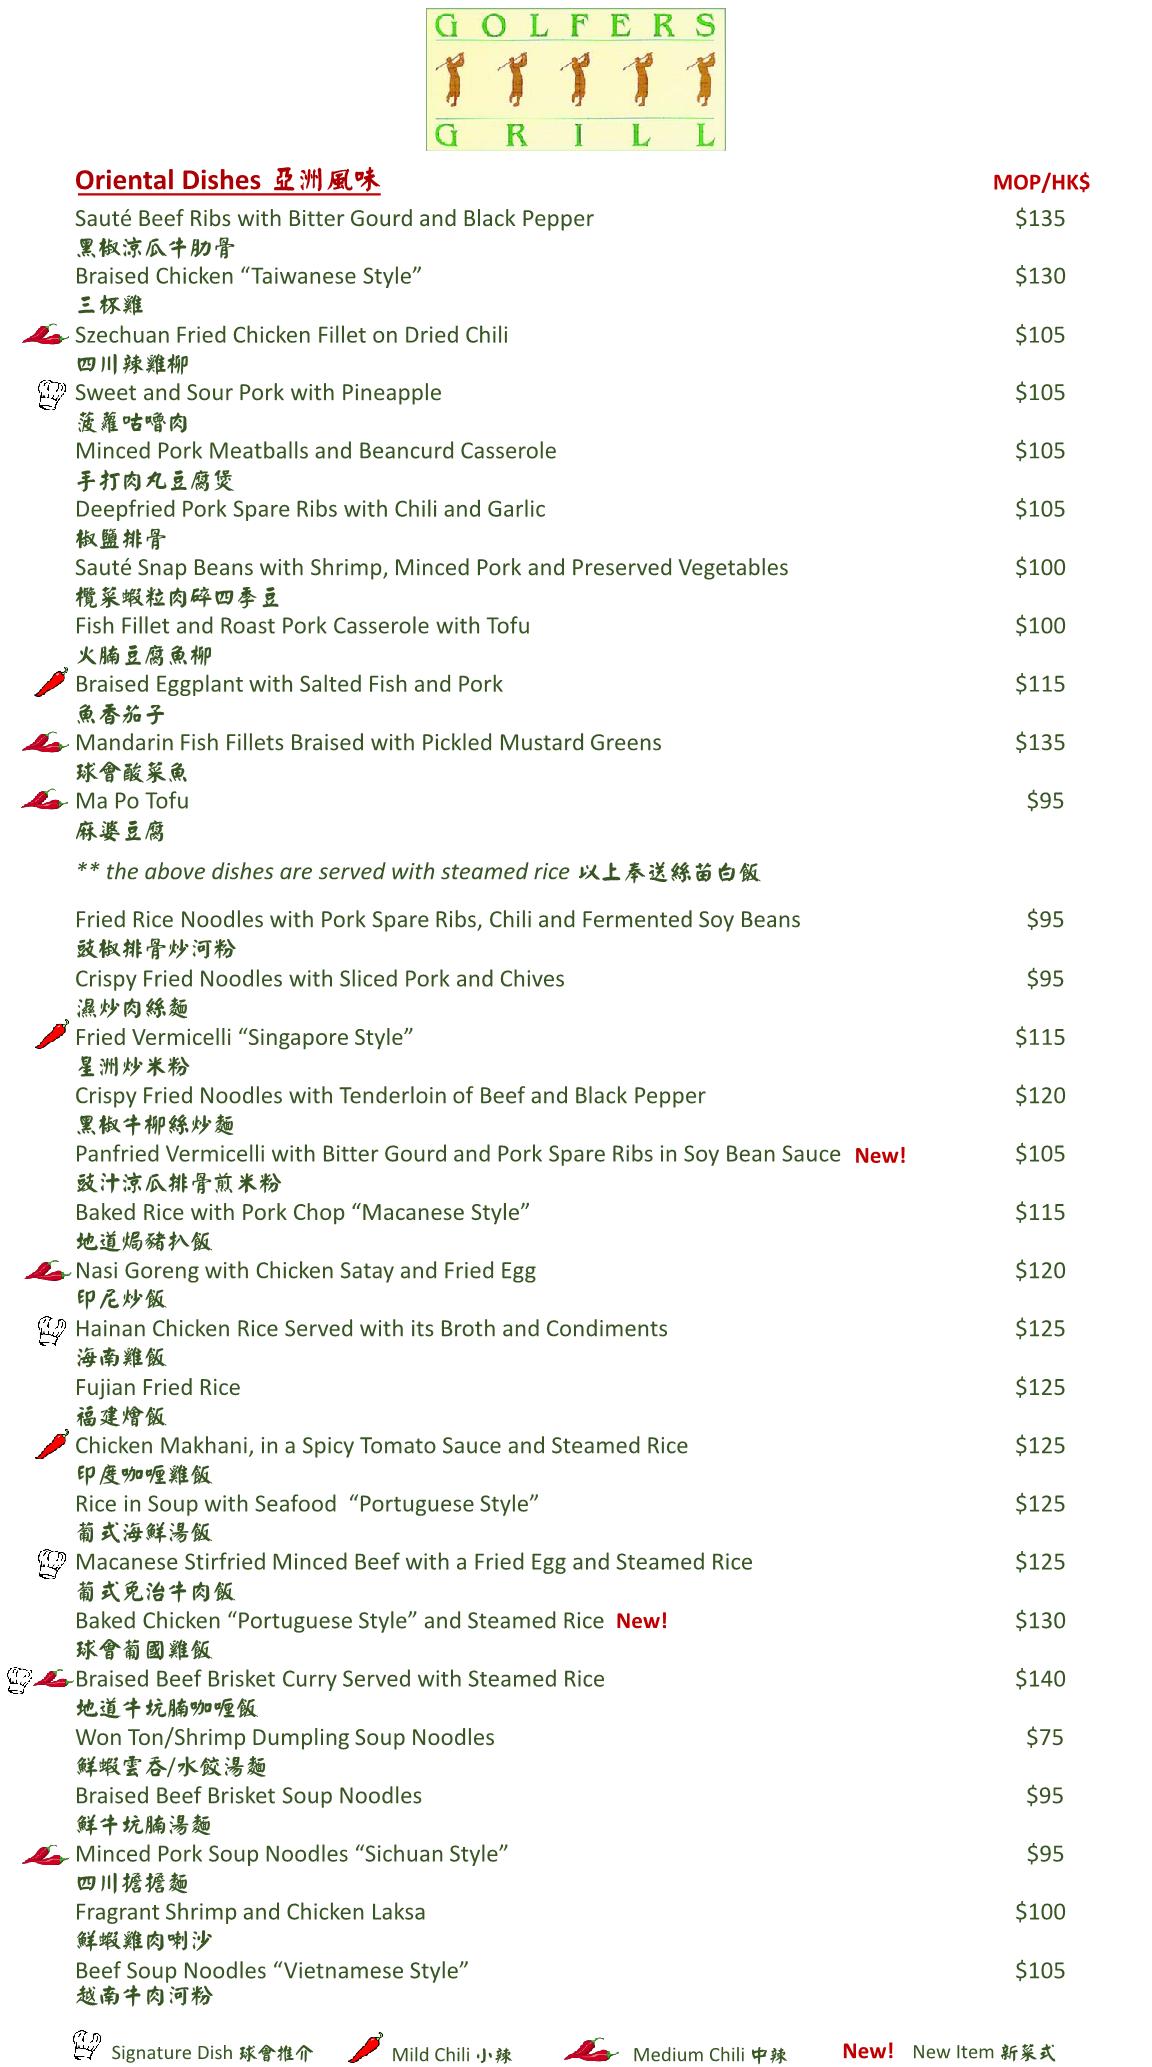 Grill-A La Carte Menu-Oriental Dishes